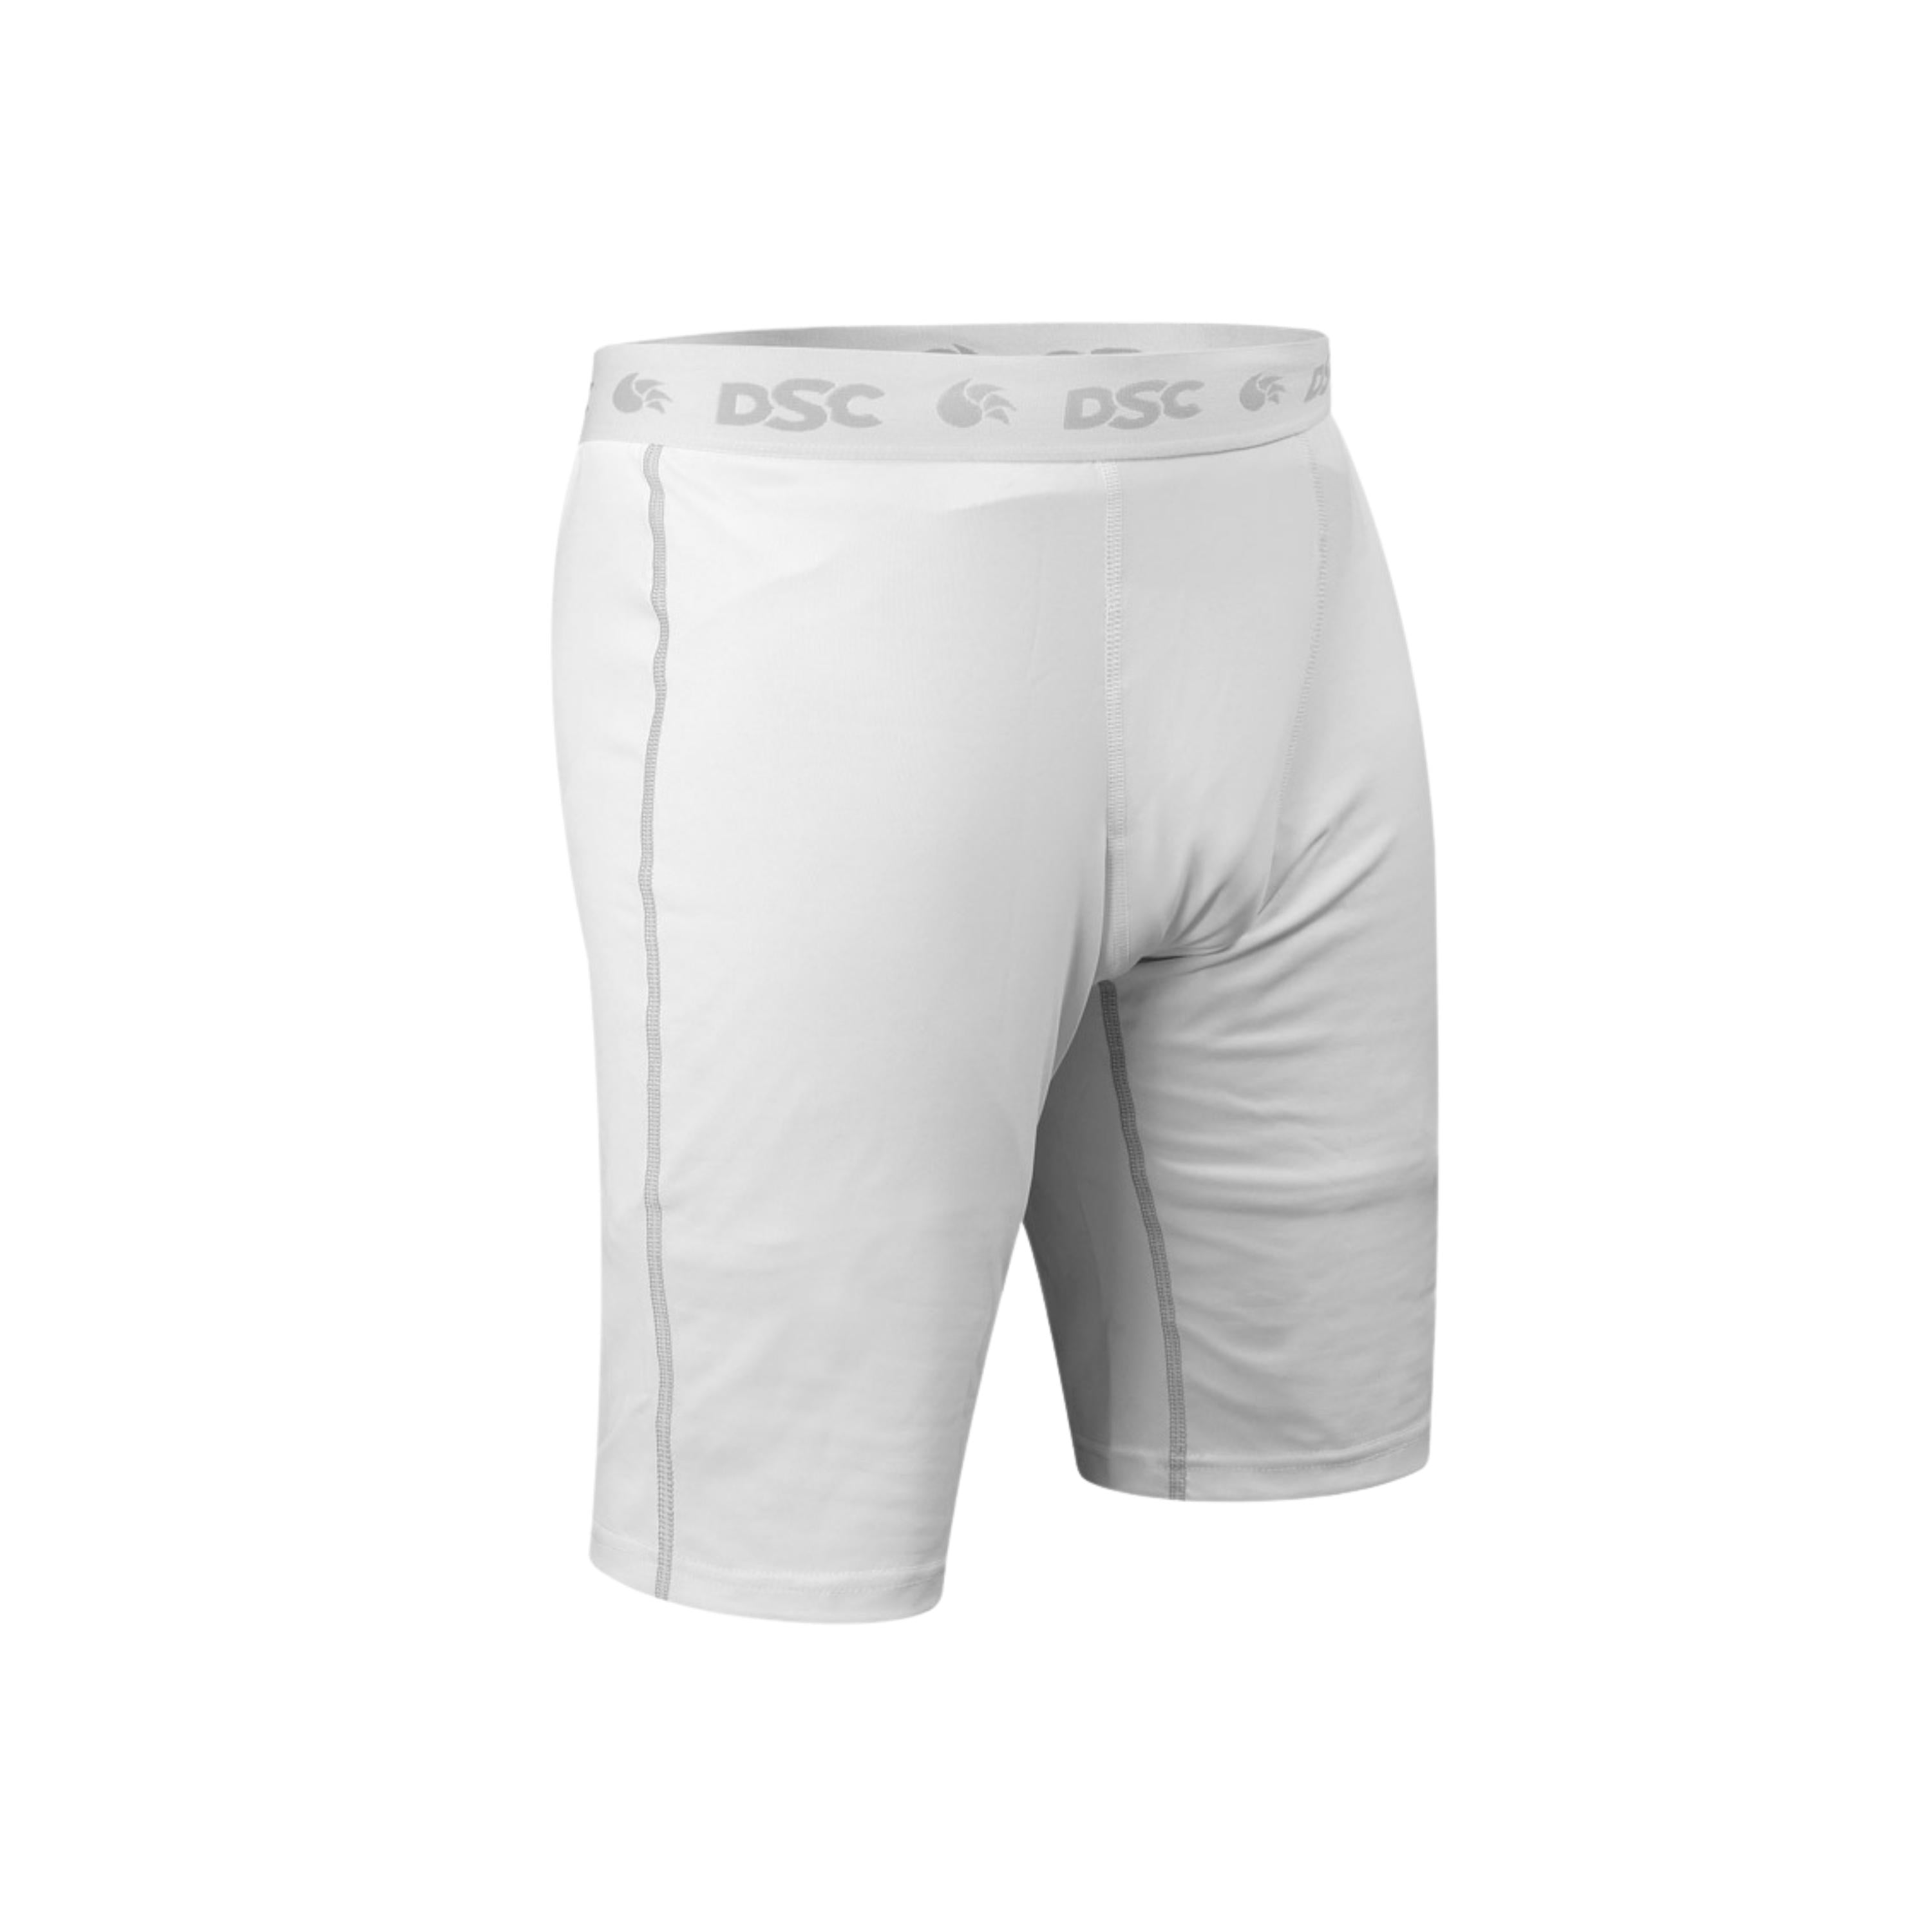 DSC Compression Half Thigh White Shorts